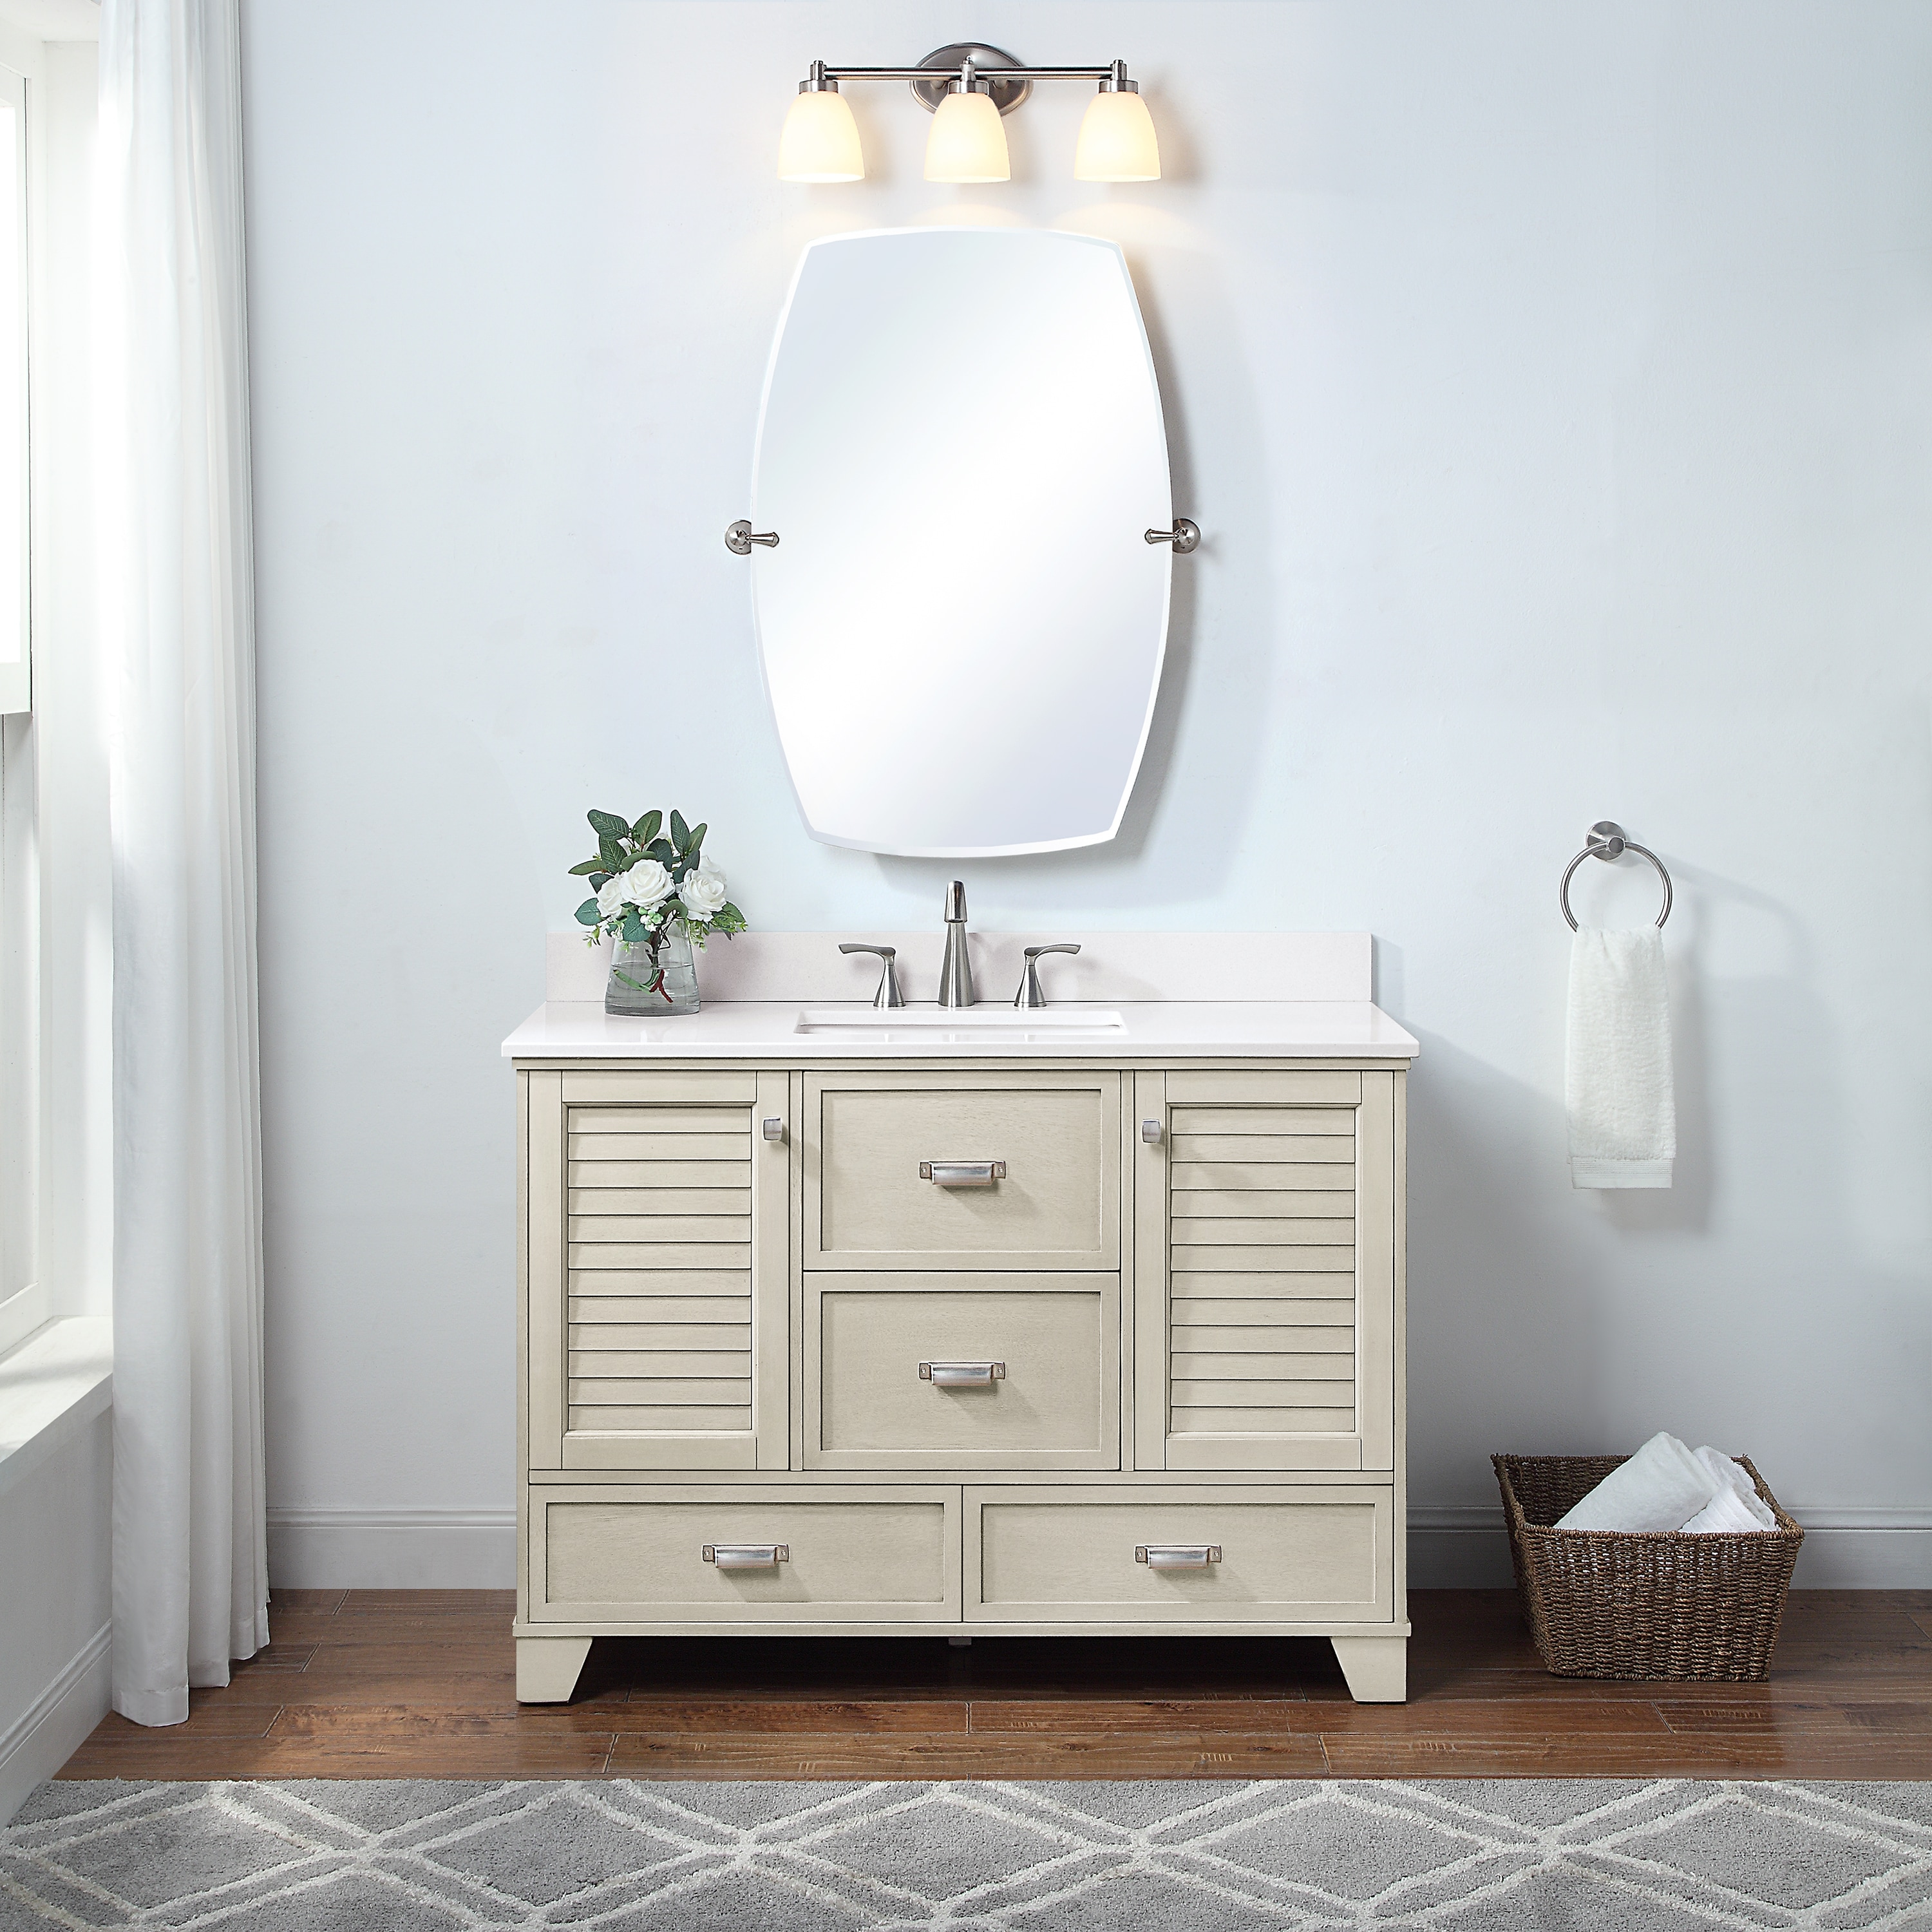 Off White Bathroom Vanities At Com, Off White Bathroom Vanity Ideas